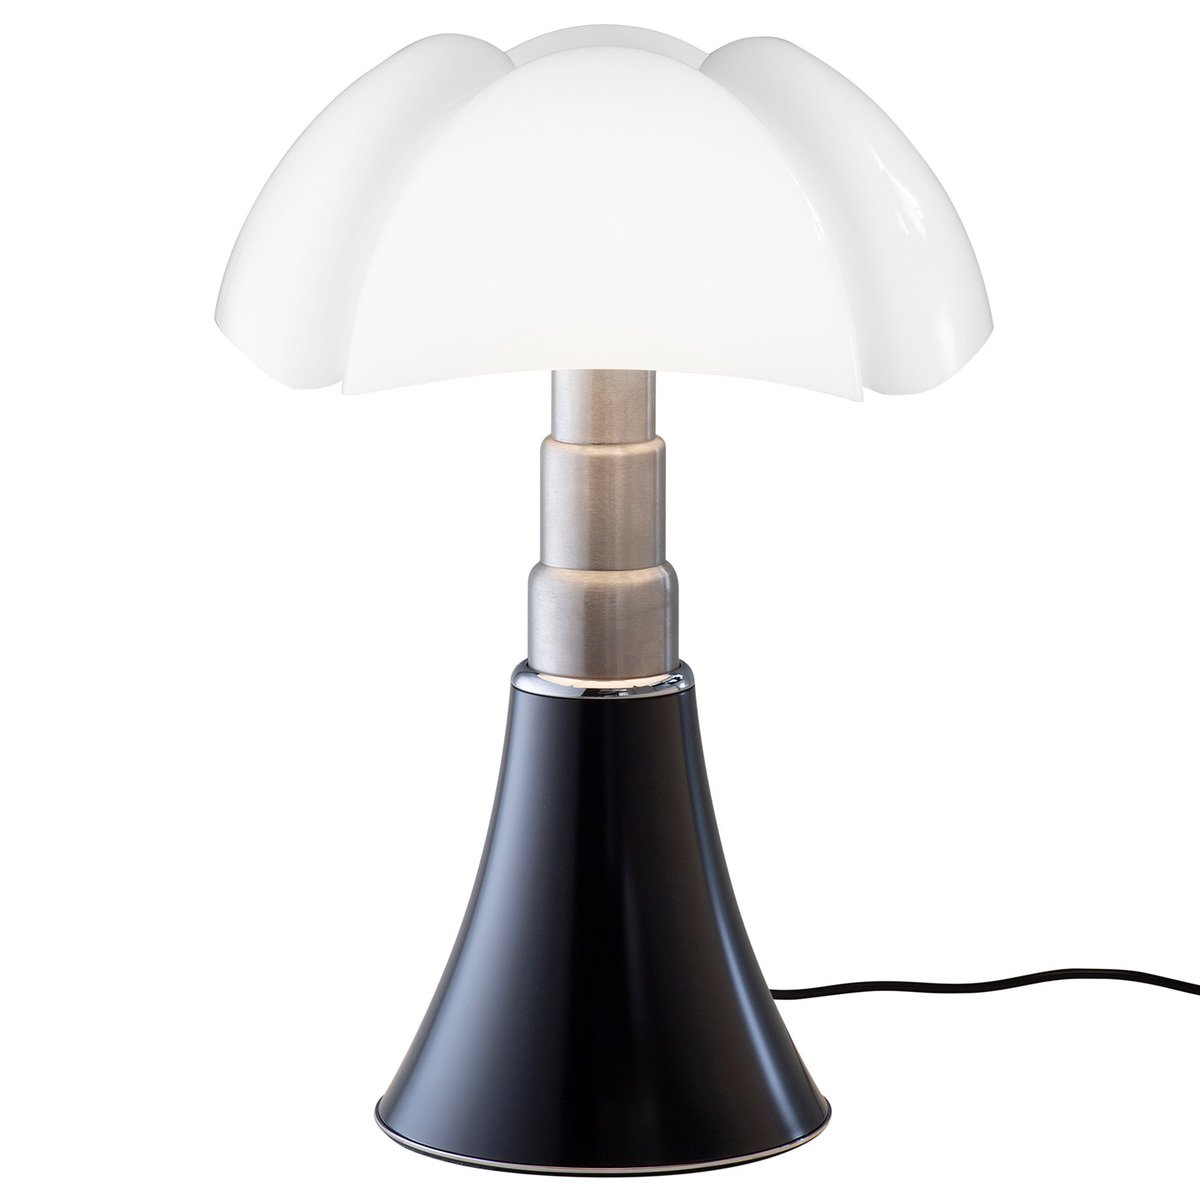 Vervagen Minst Triatleet Martinelli Luce Pipistrello table lamp, black | Finnish Design Shop